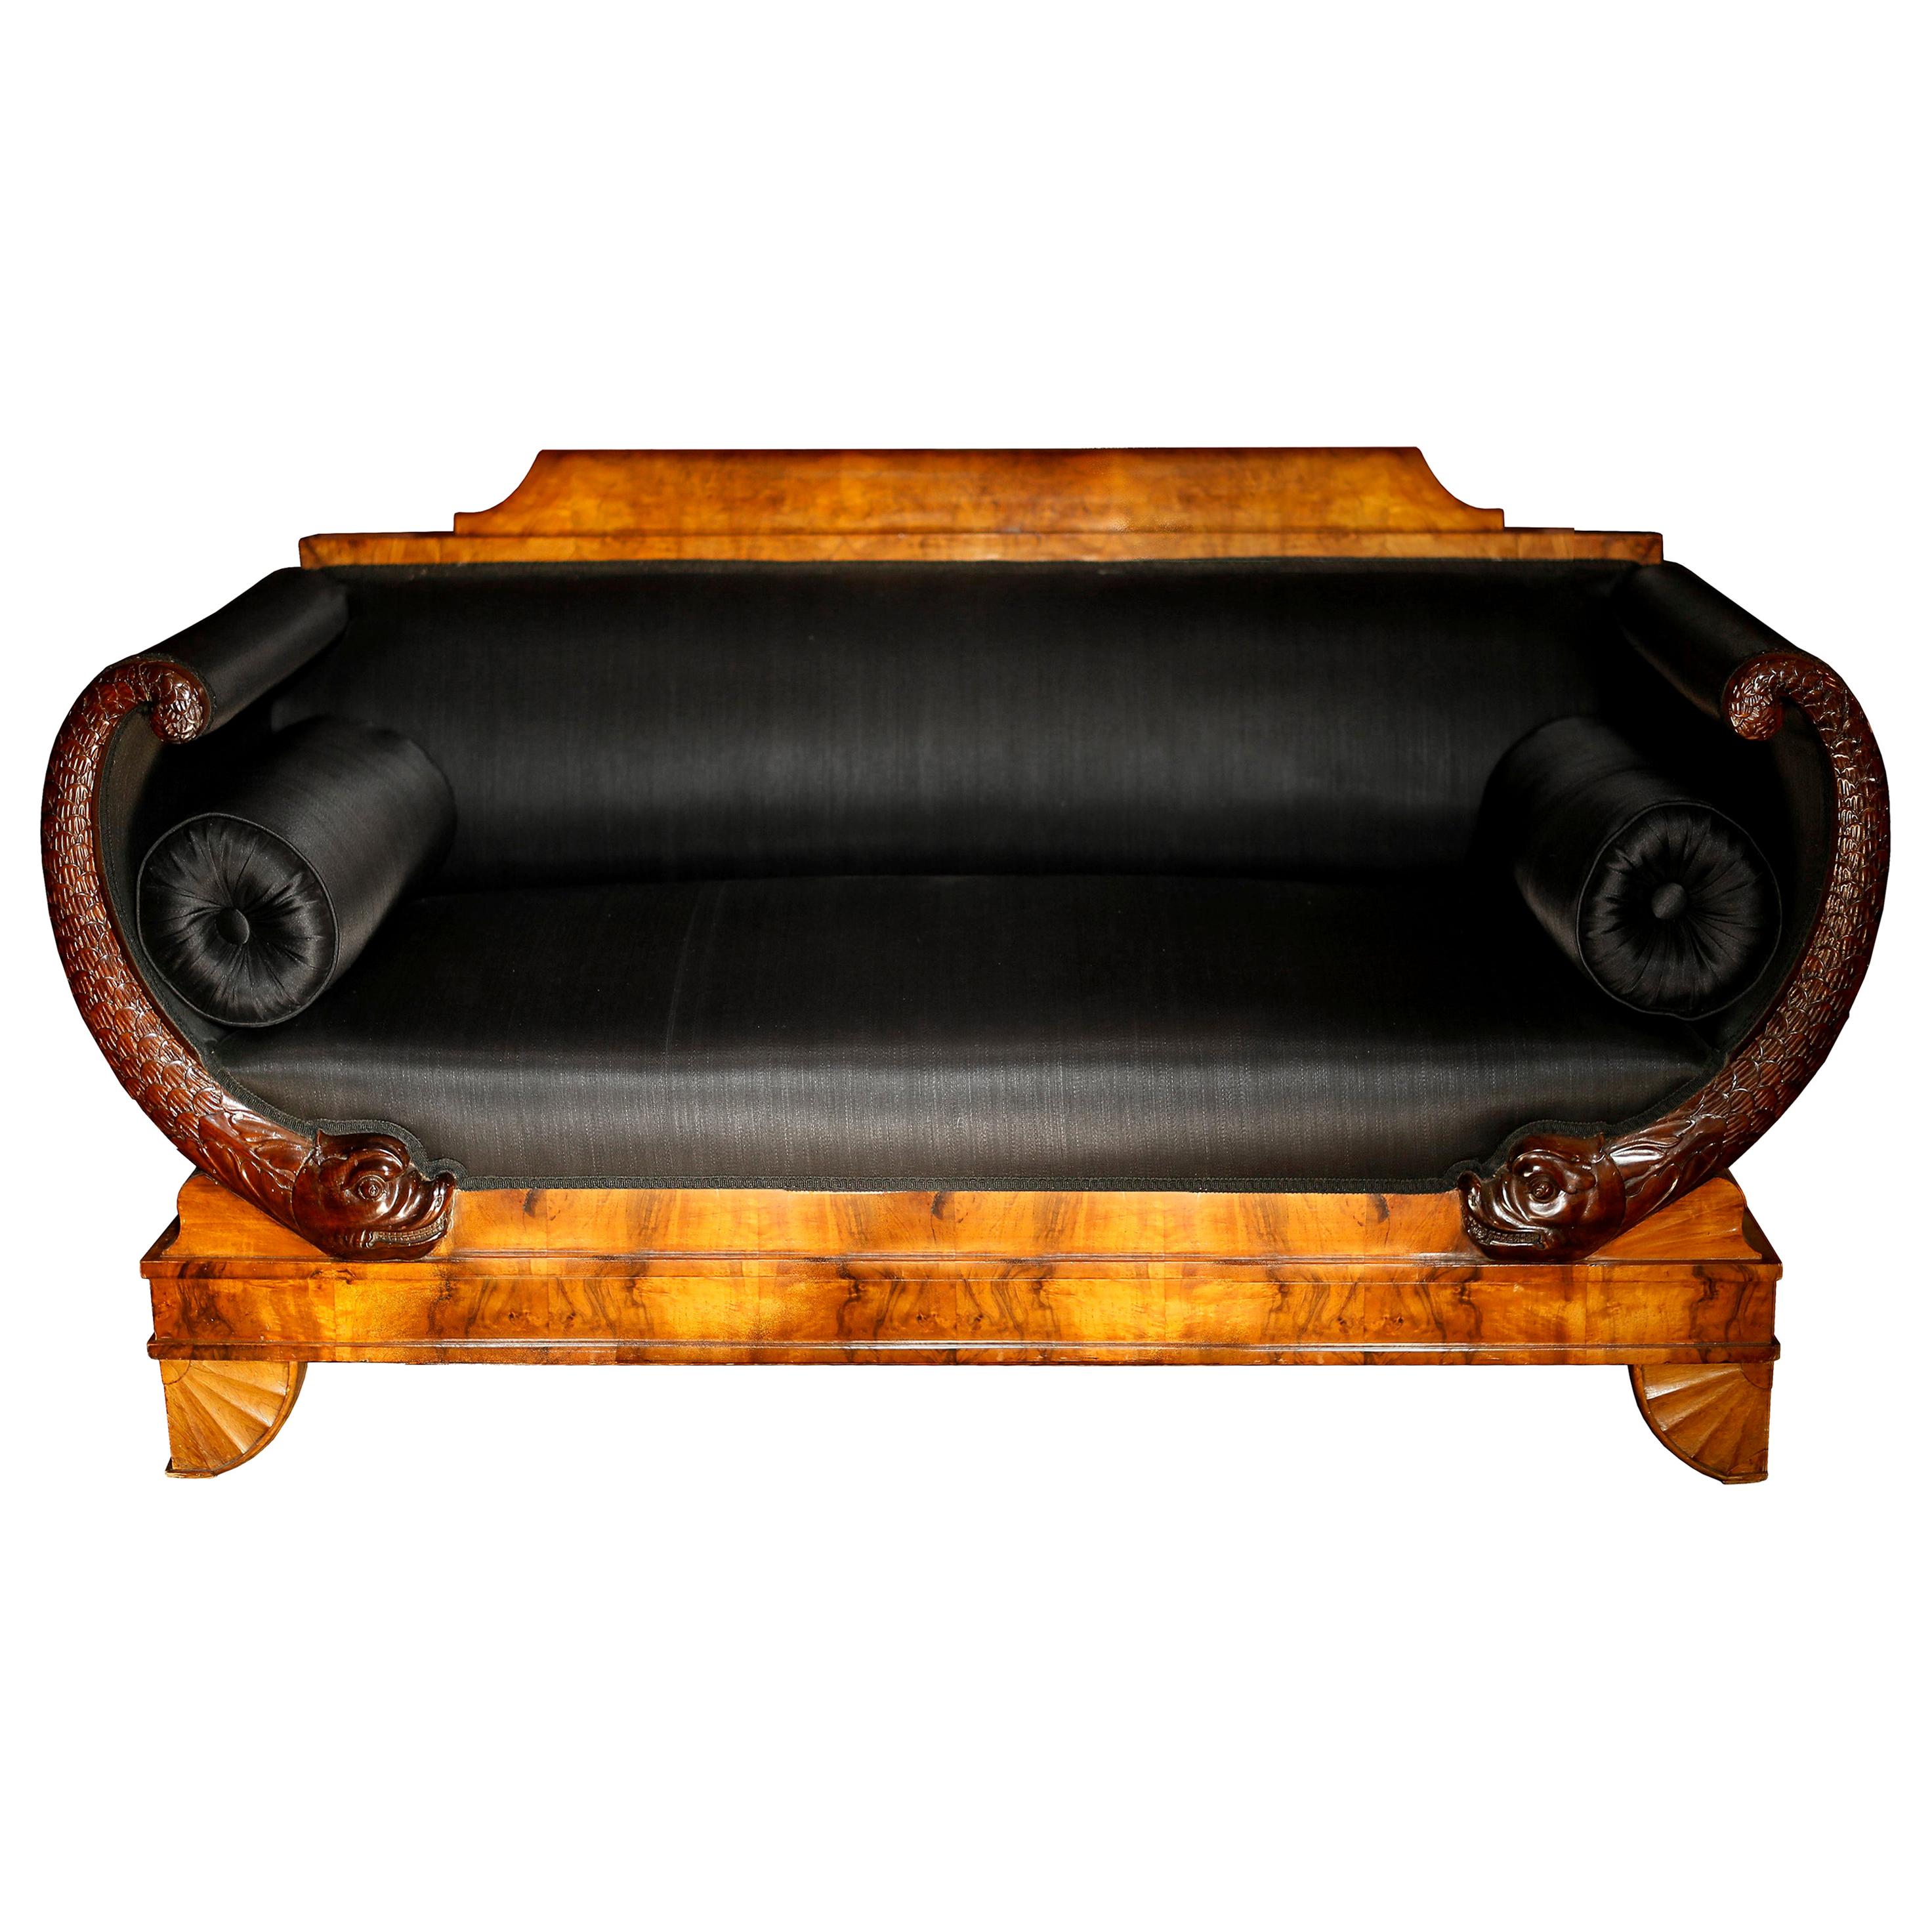 Early 19th Century German Burl Walnut Biedermeier Sofa in Black Horsehair Fabric